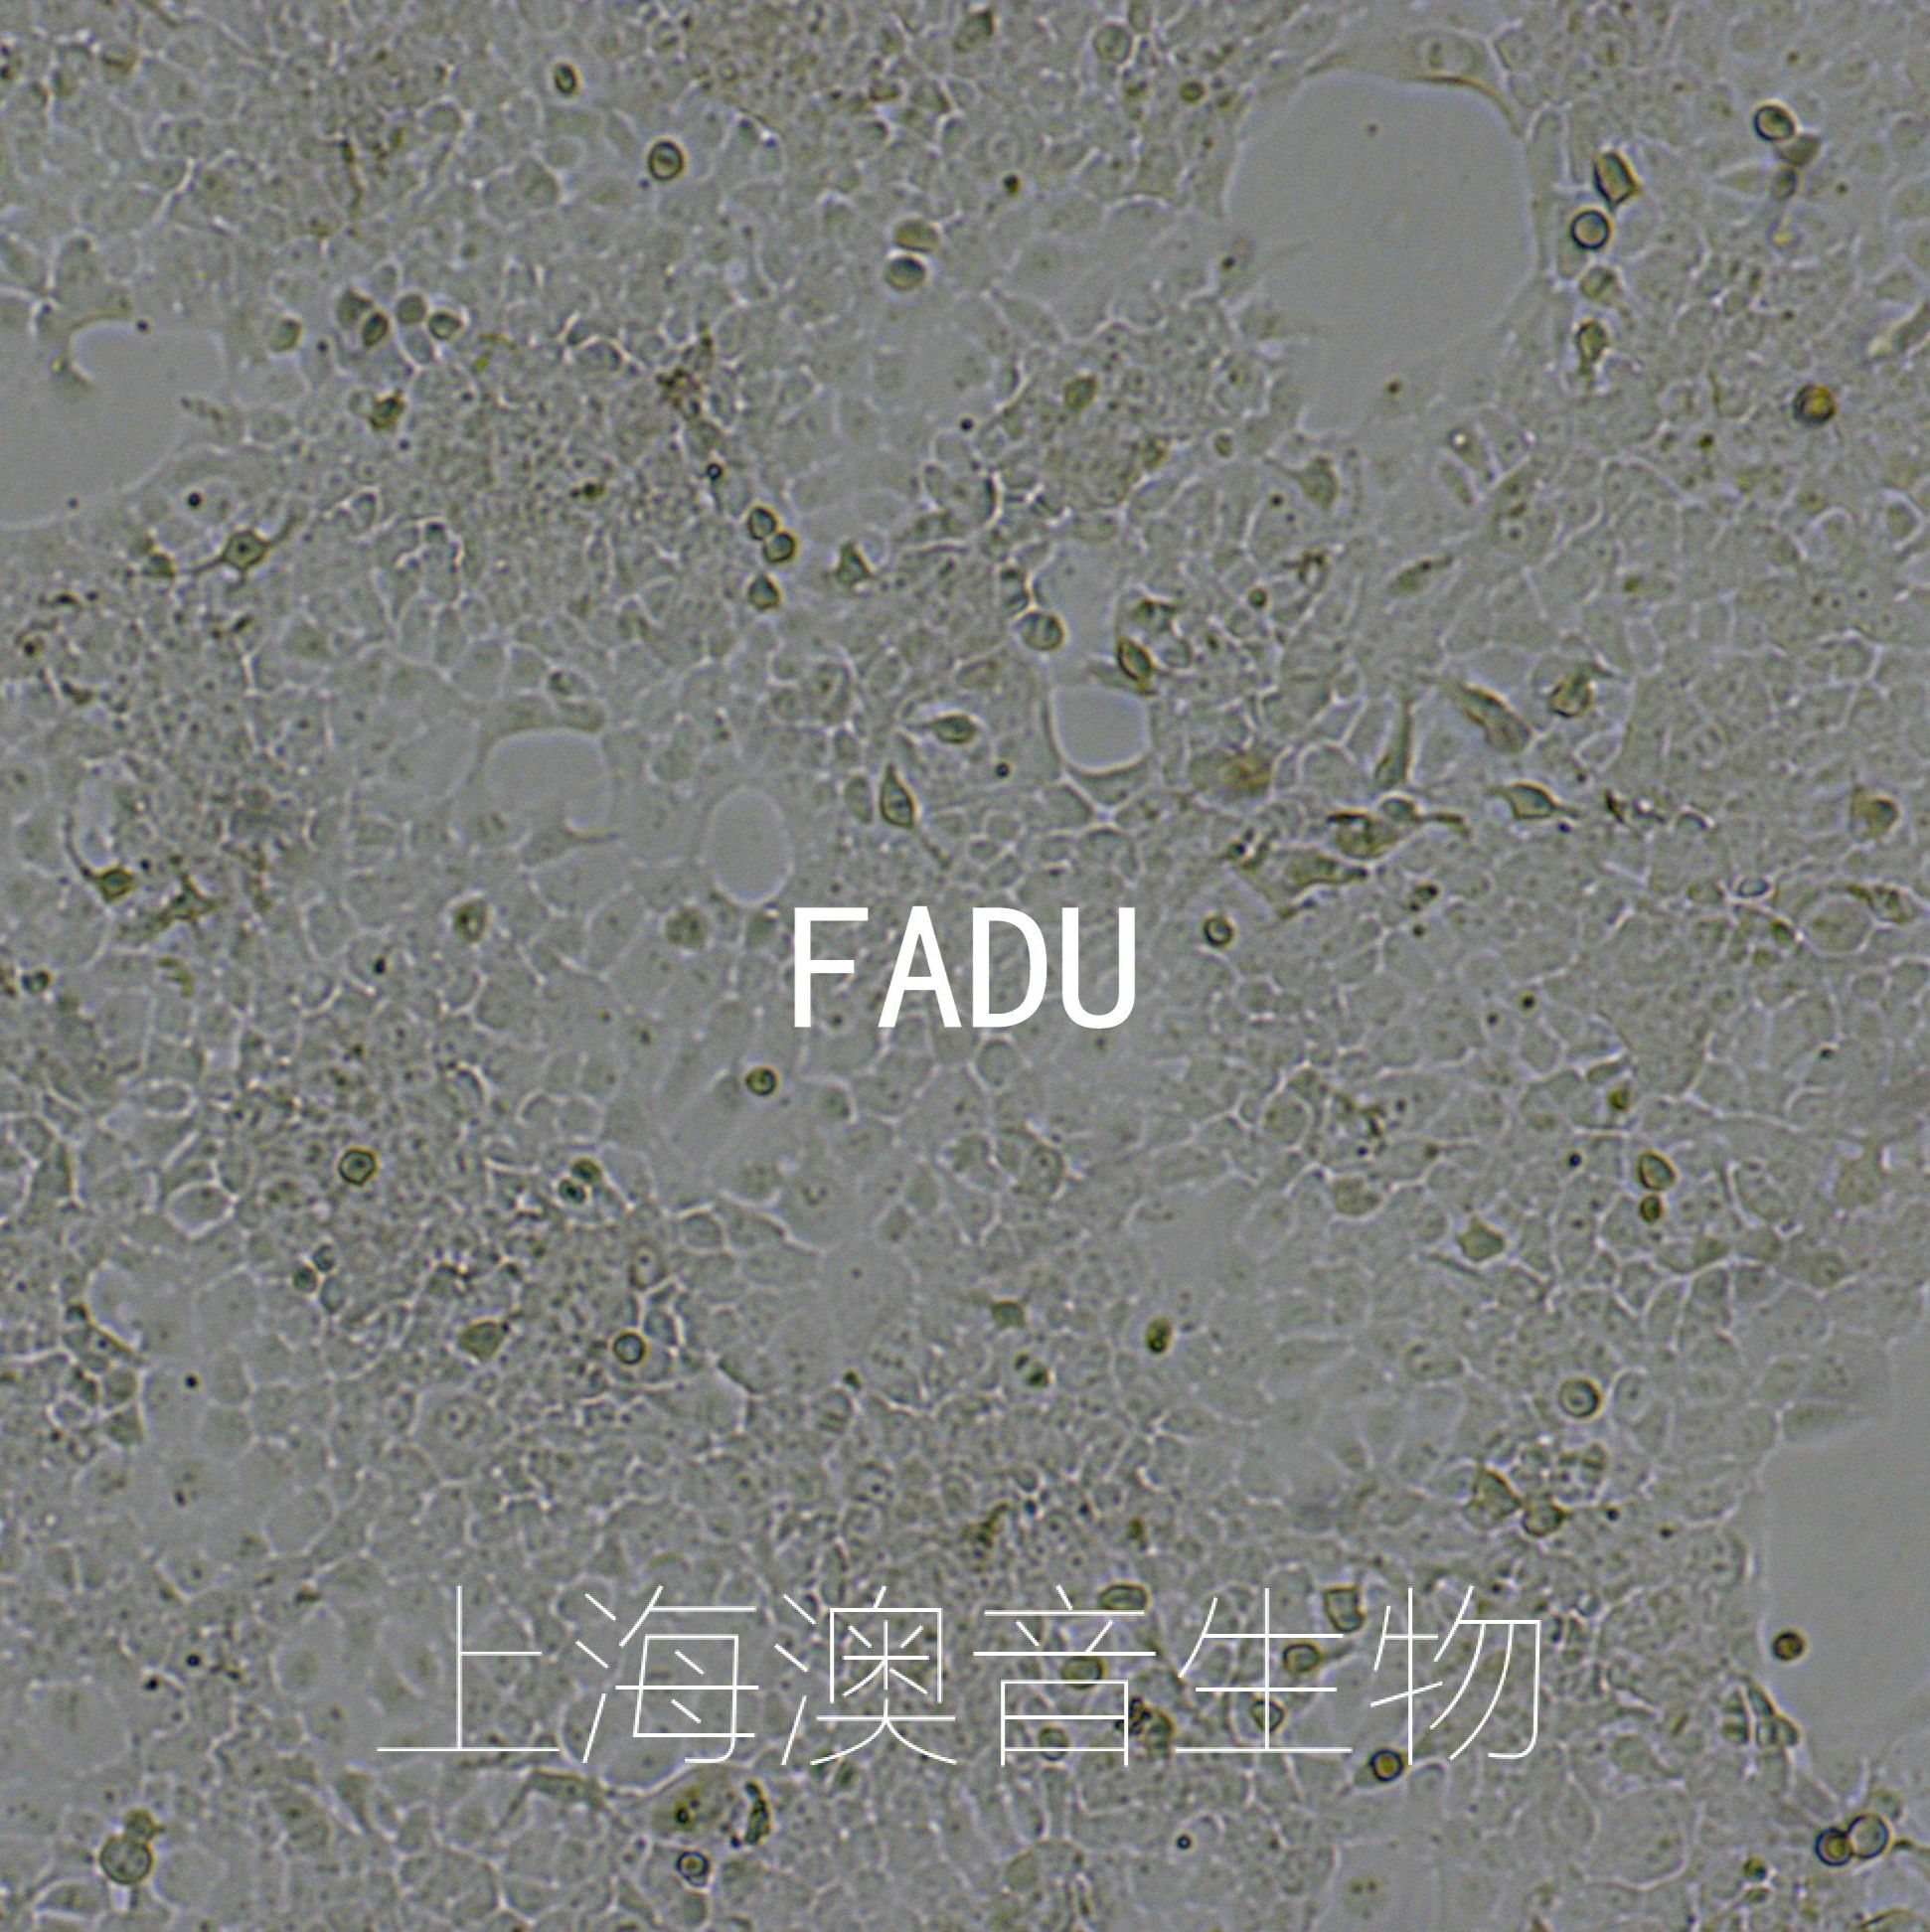 FaDu[FaDU; FADU]咽鳞癌细胞